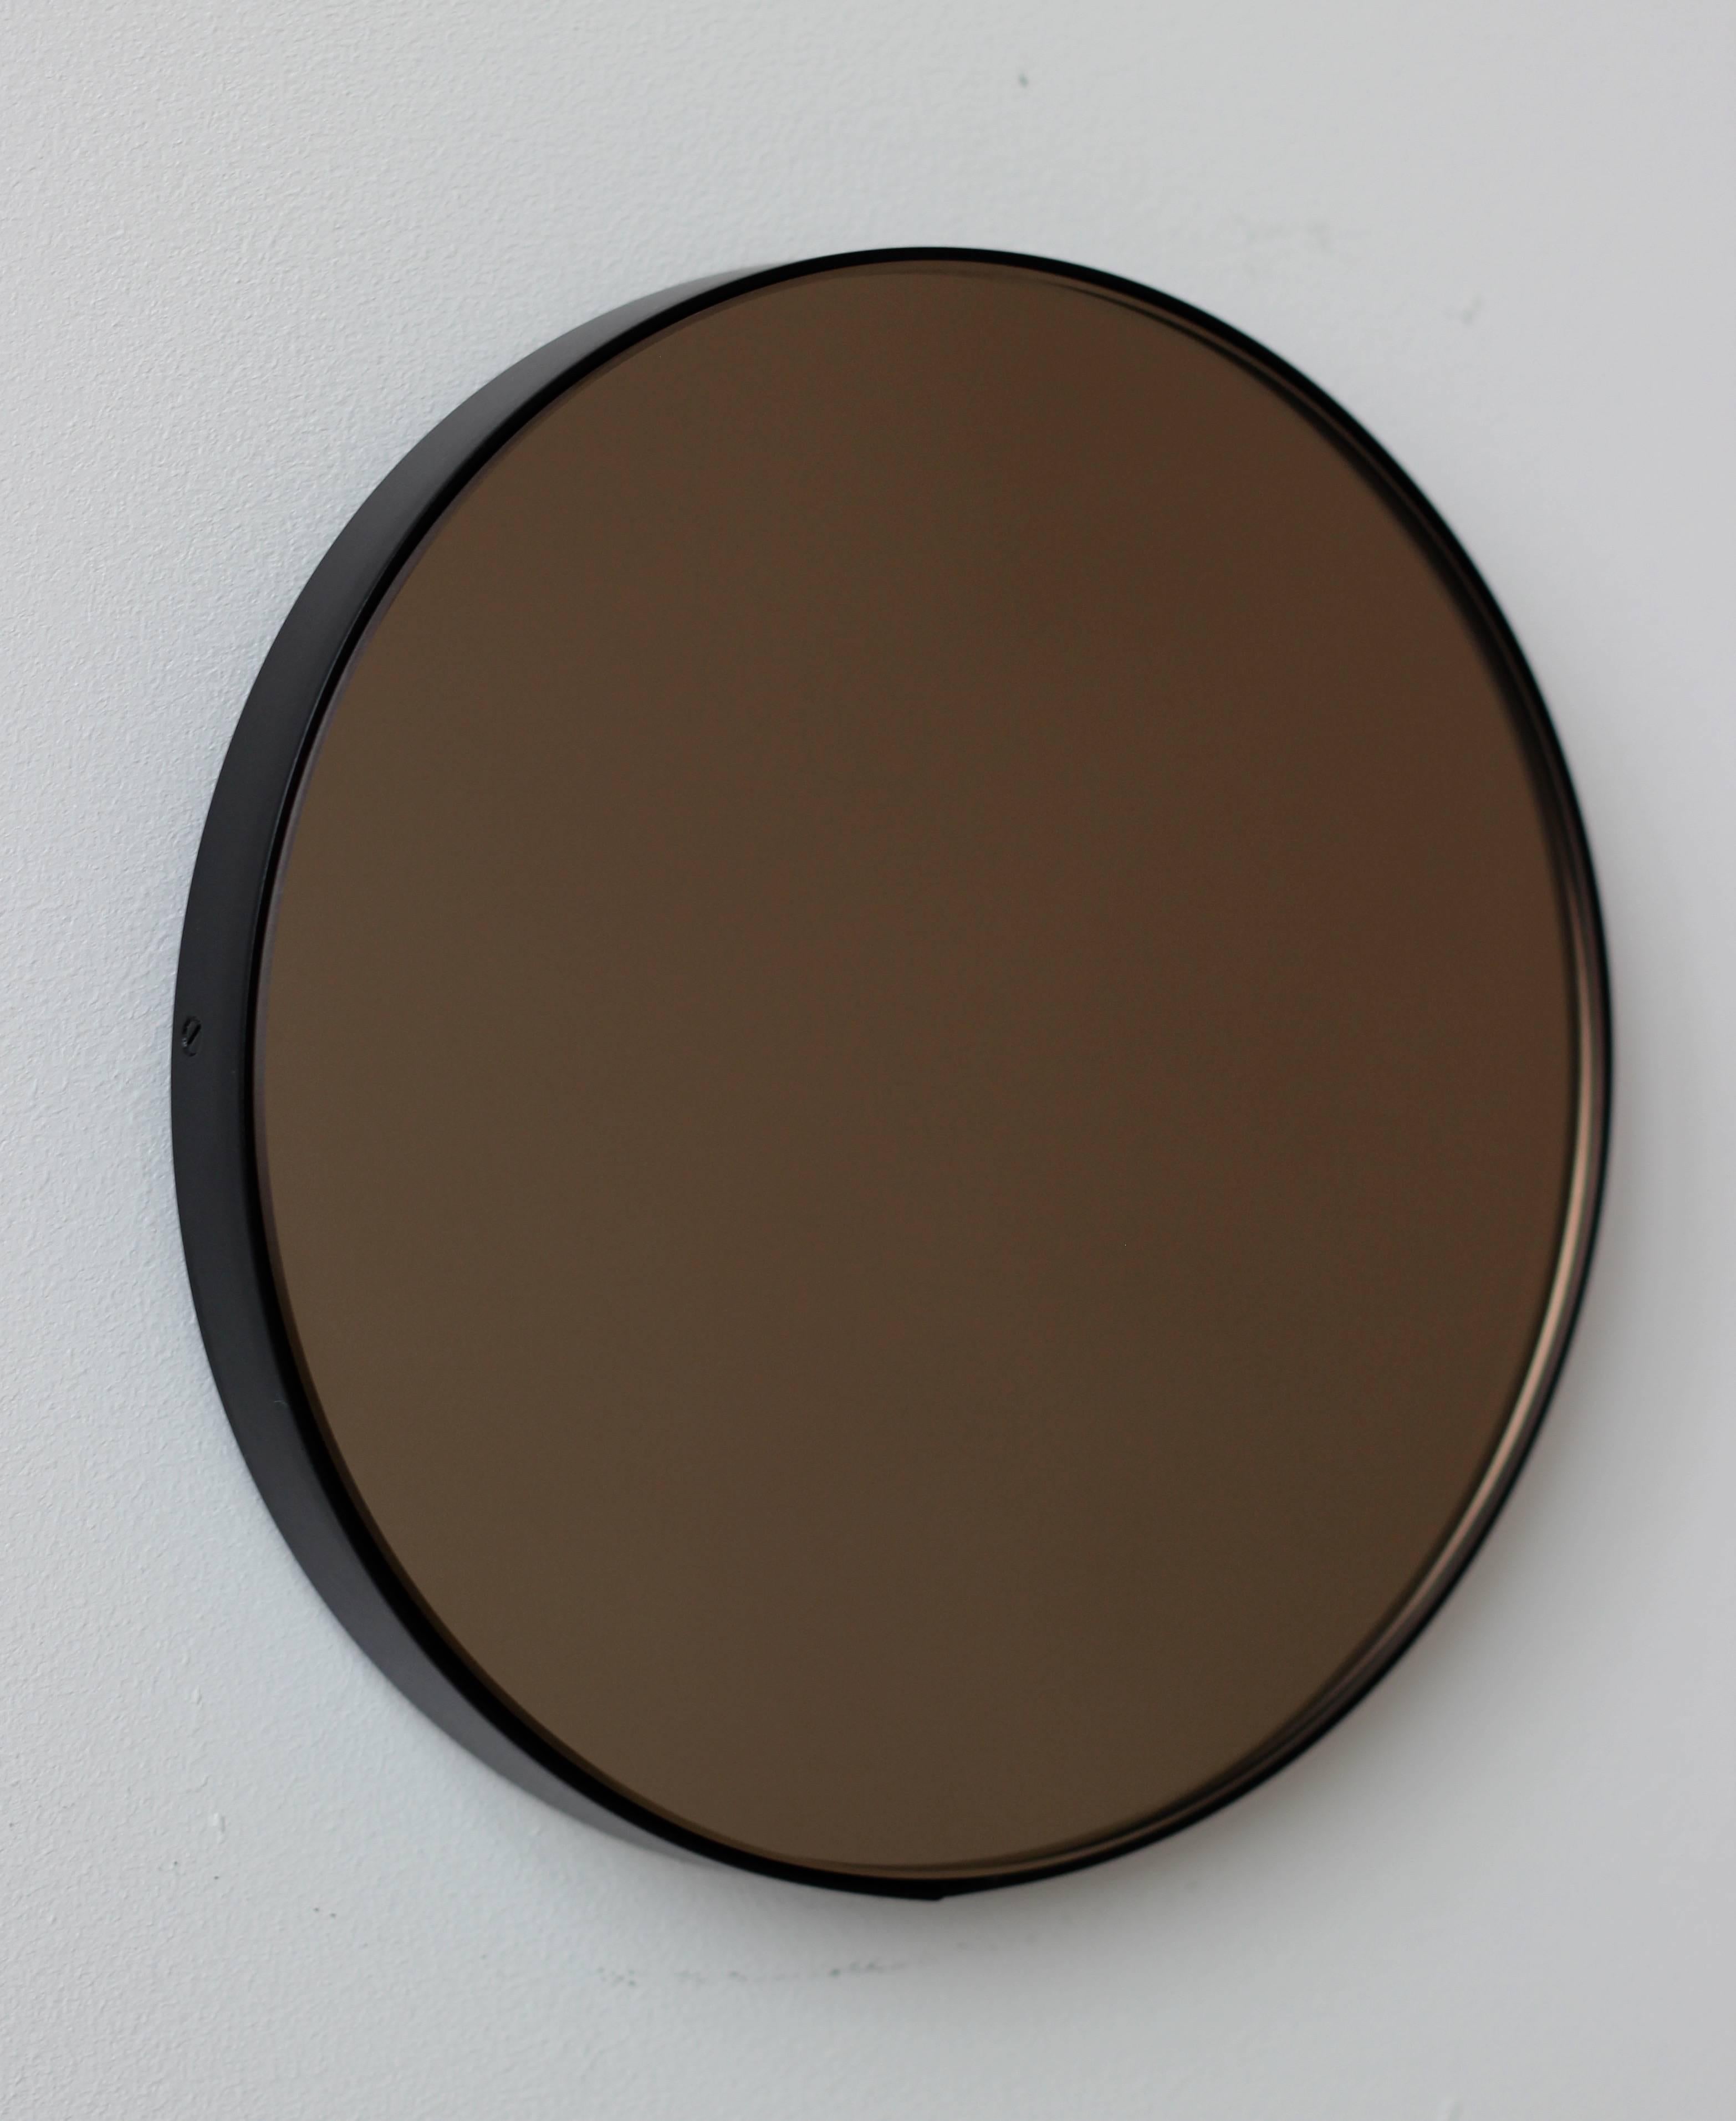 black tinted mirror